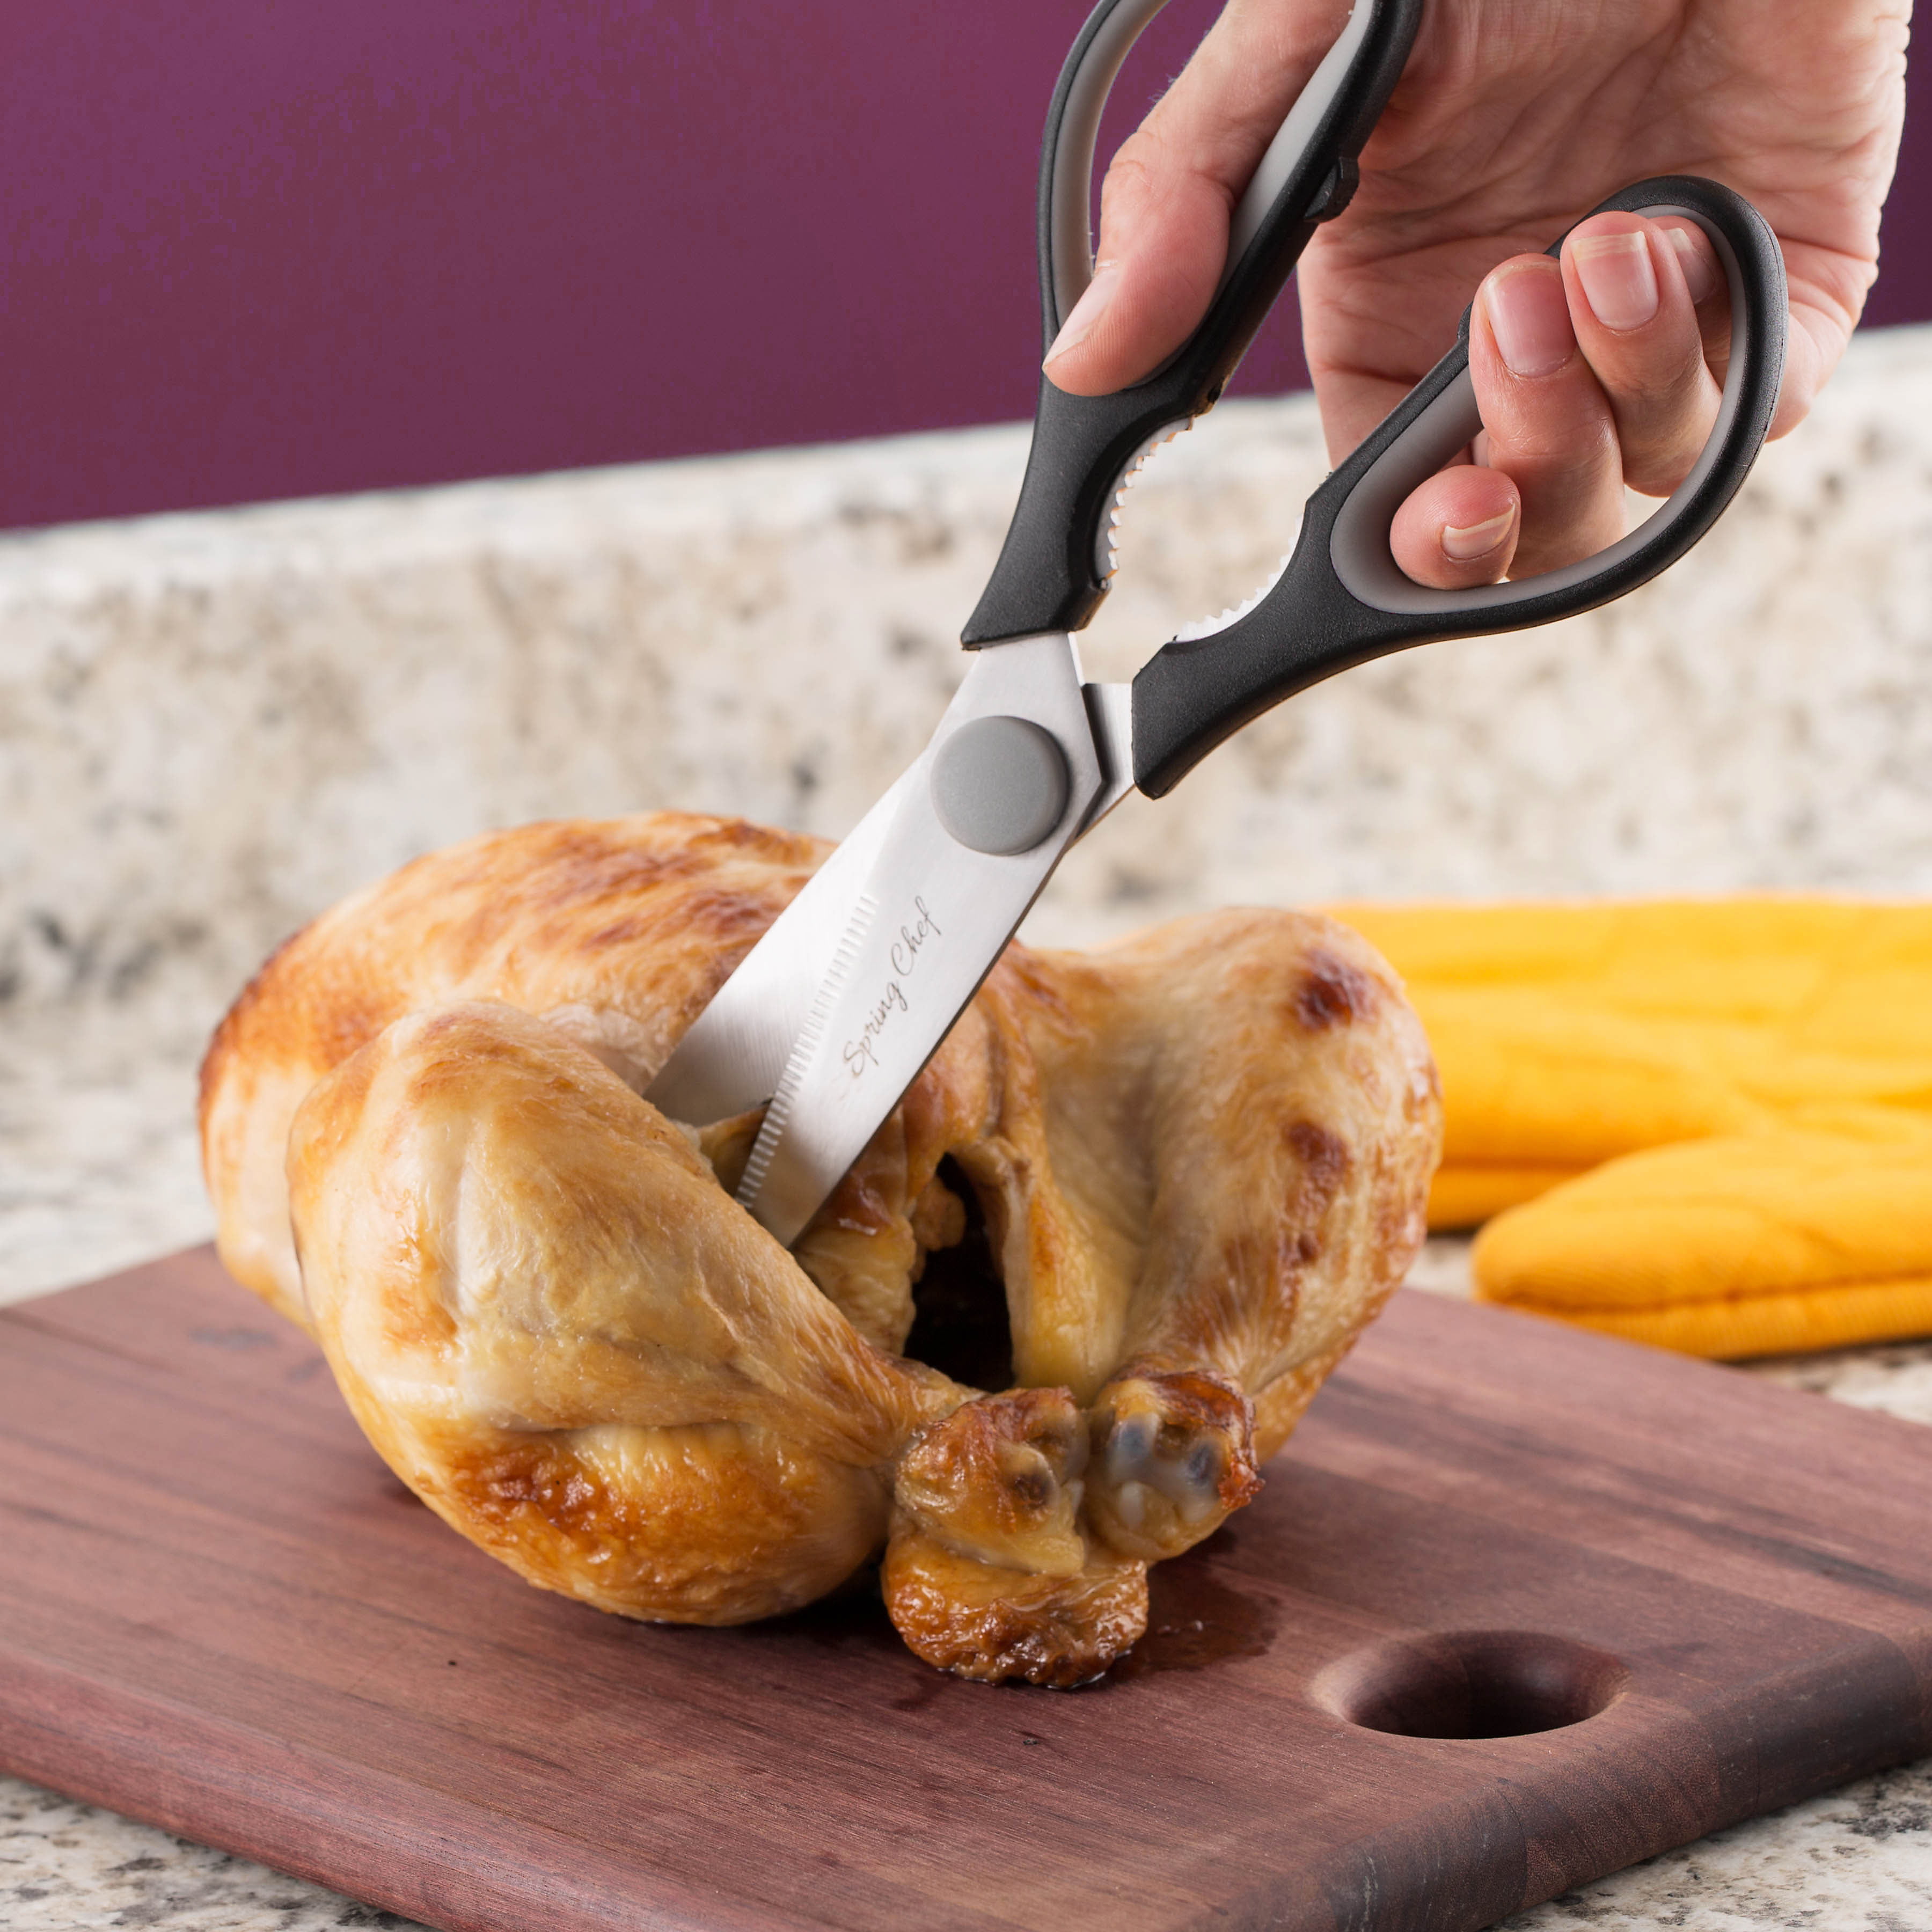 Cutco Shears Scissors Sheath Only ~ Holder Cover Case Guard Kitchen Cutlery  Clipper Tool Protector